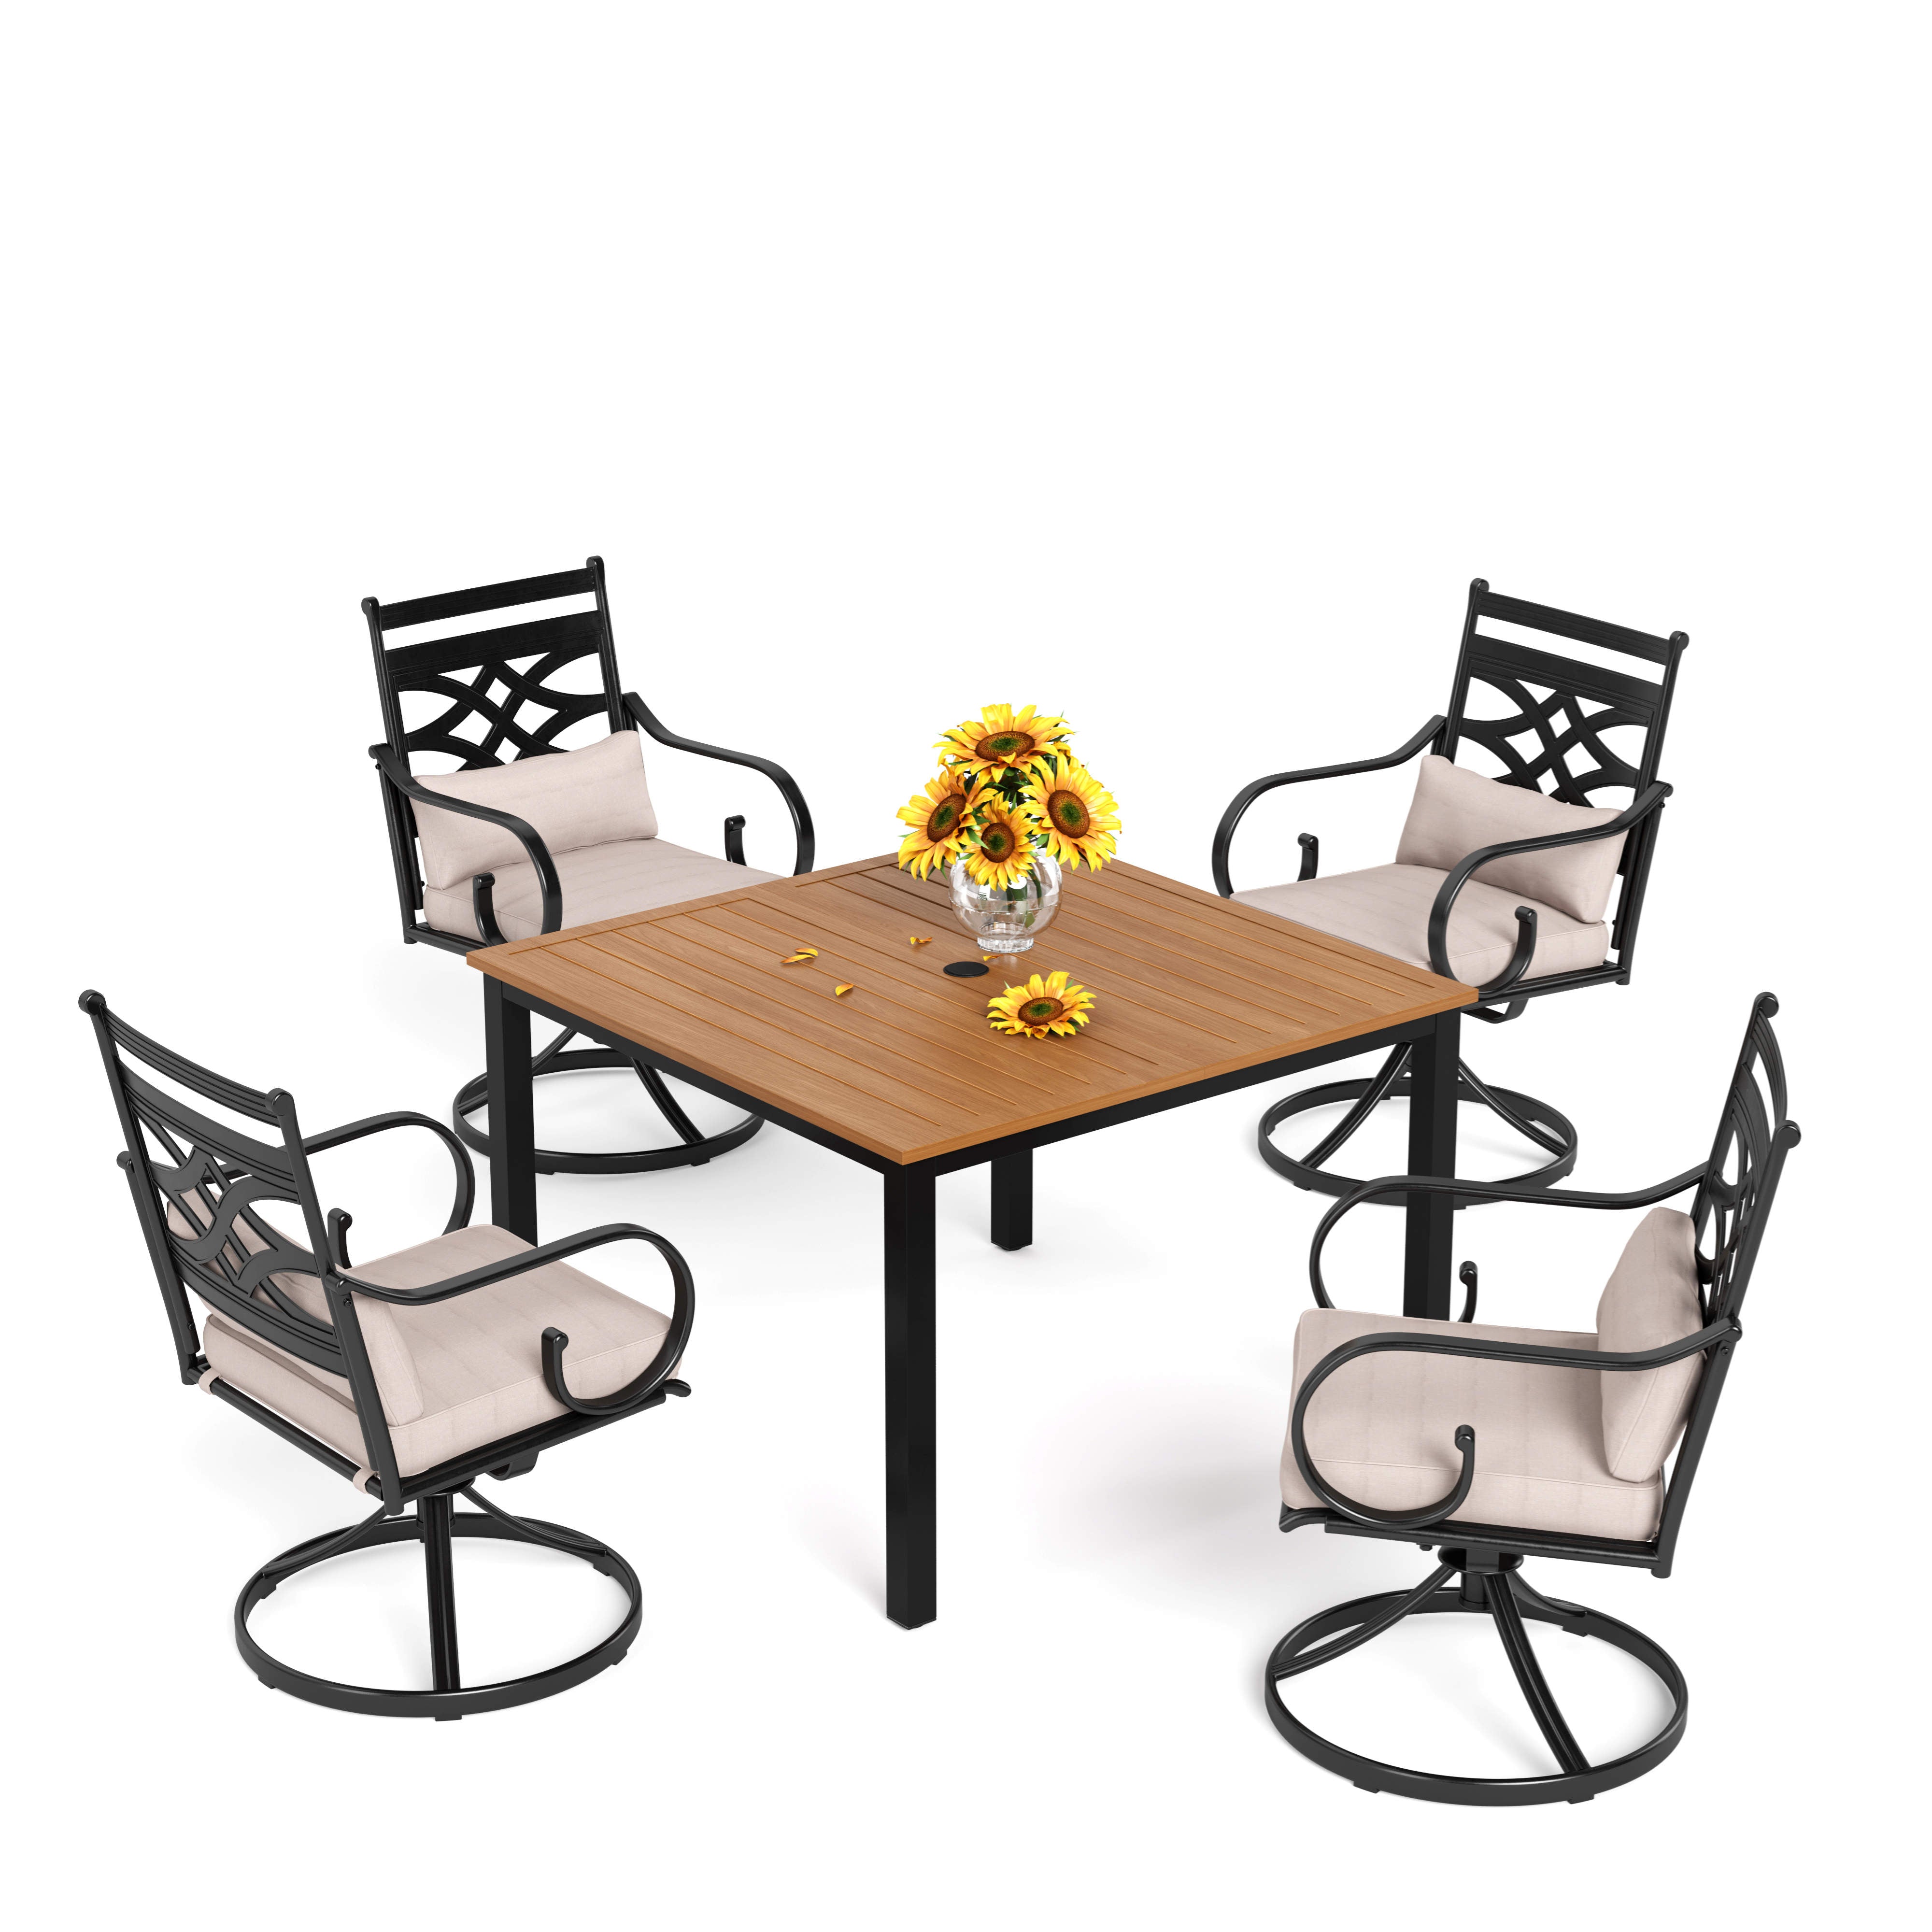 MFSTUDIO 5-Piece Patio Dining Set Teak-grain Table Cast-iron Pattern Fixed Chairs